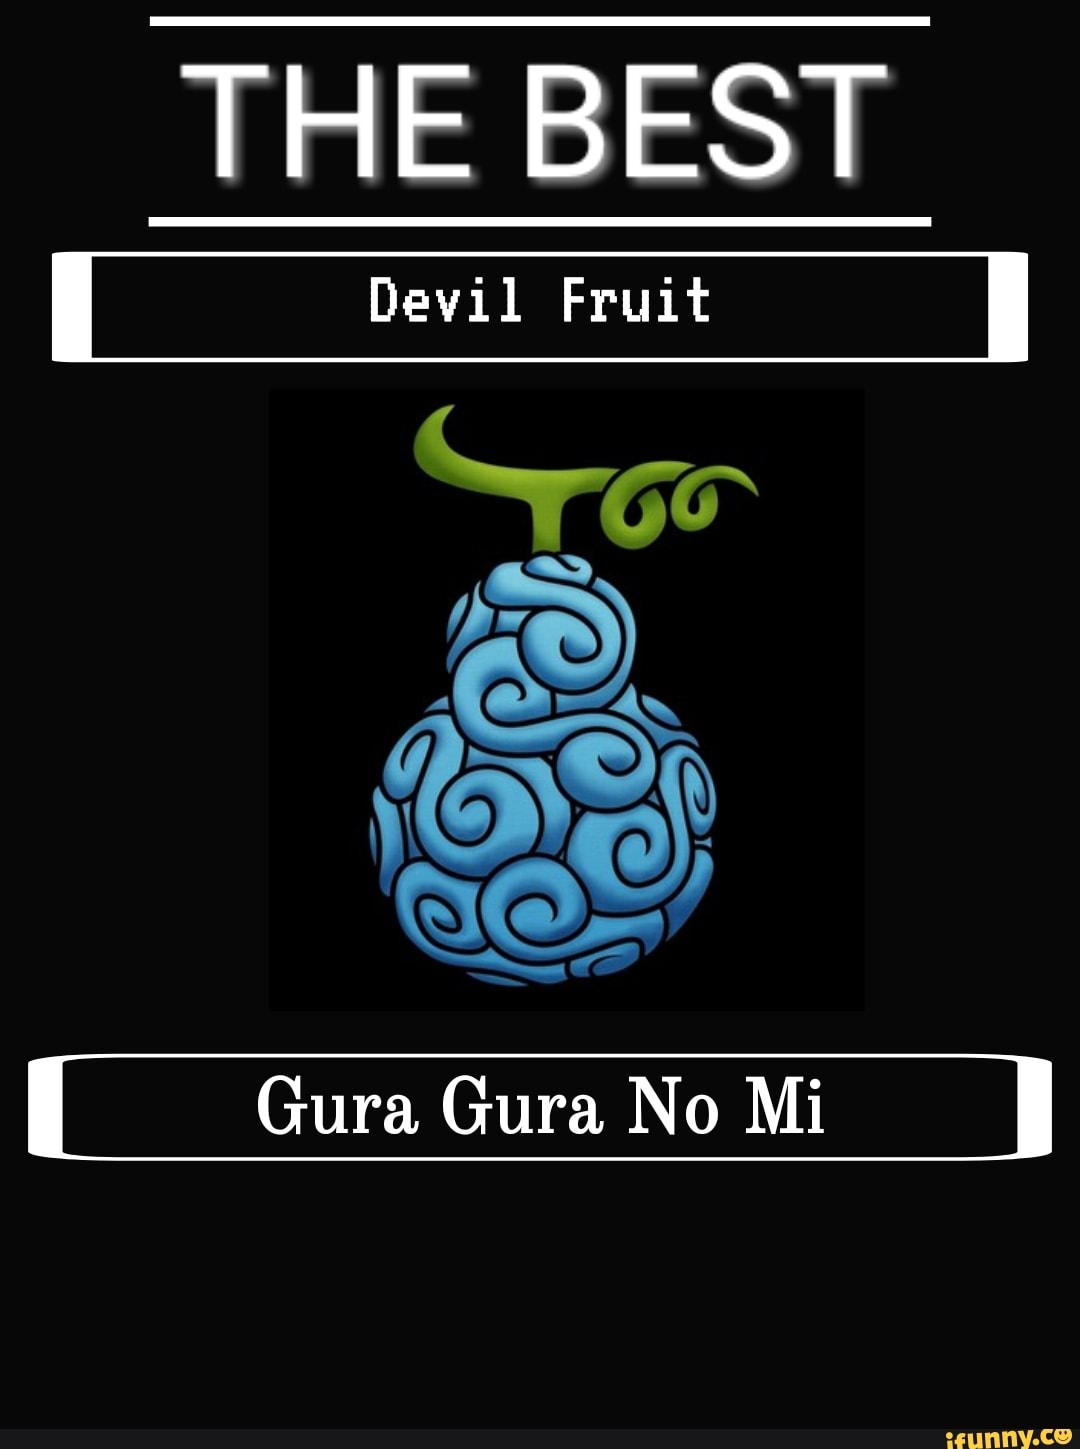 Gura Gura - Devil Fruit